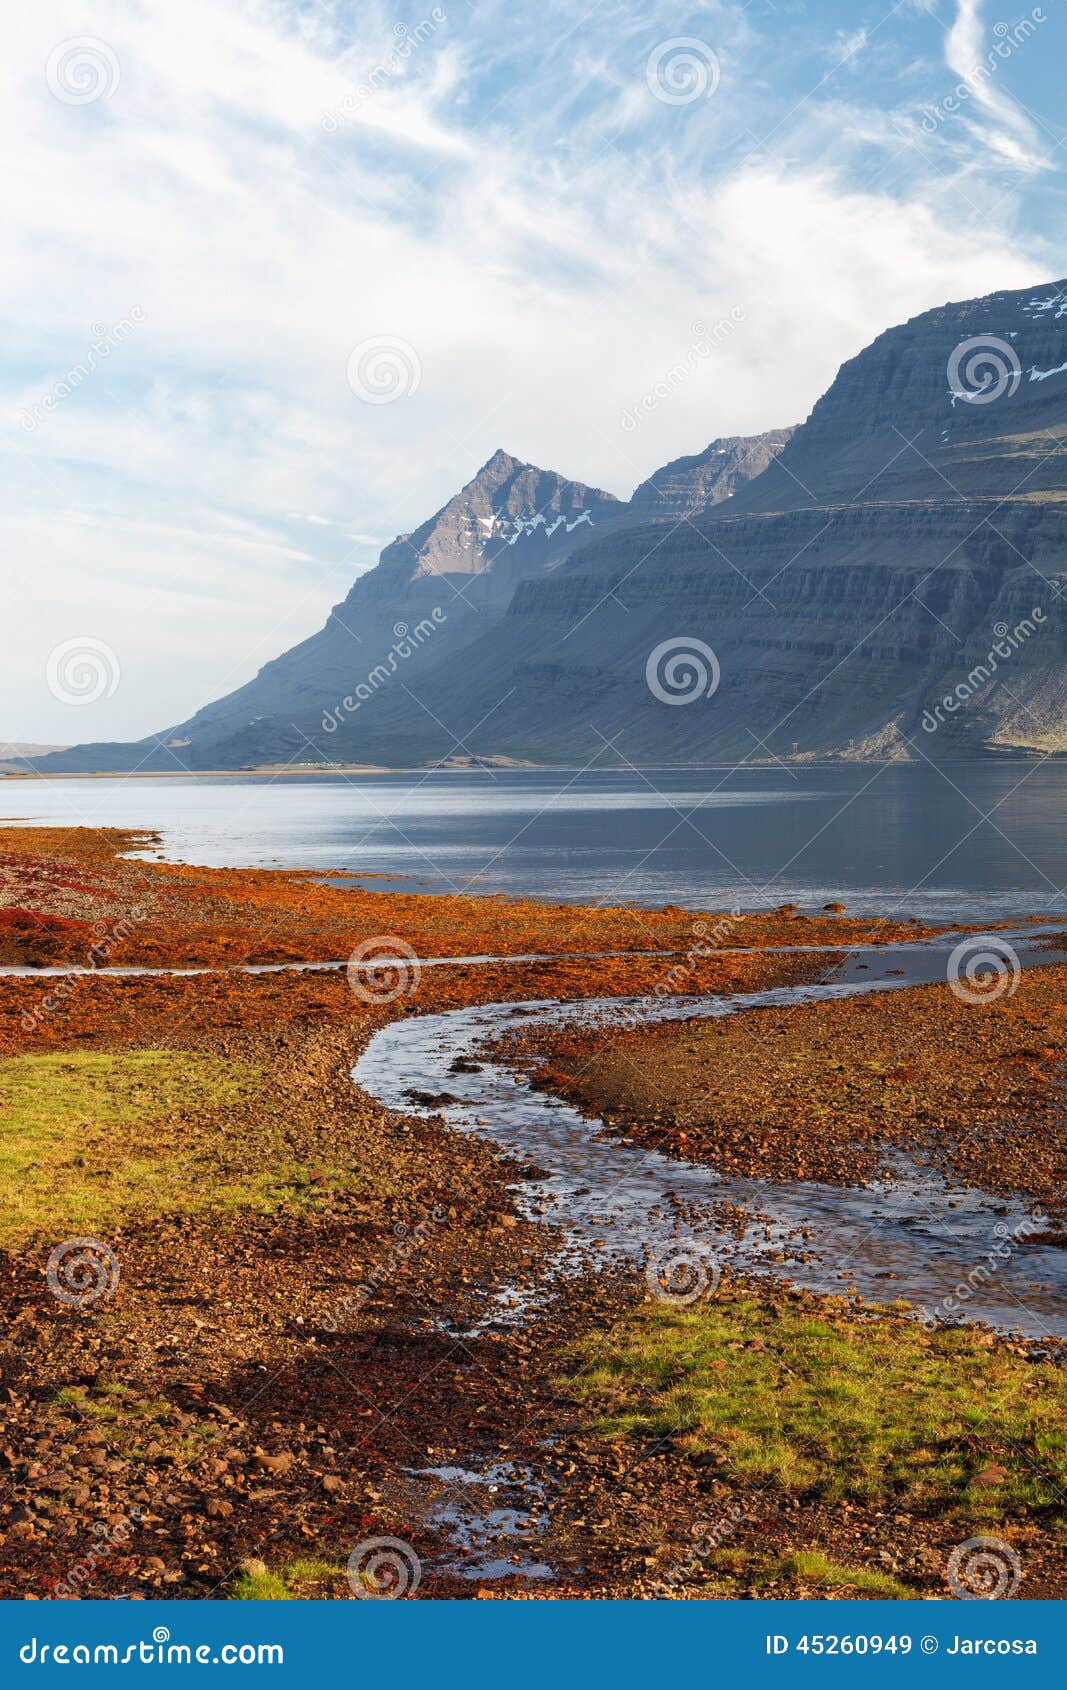 berufjordur fjord, djupivogur iceland